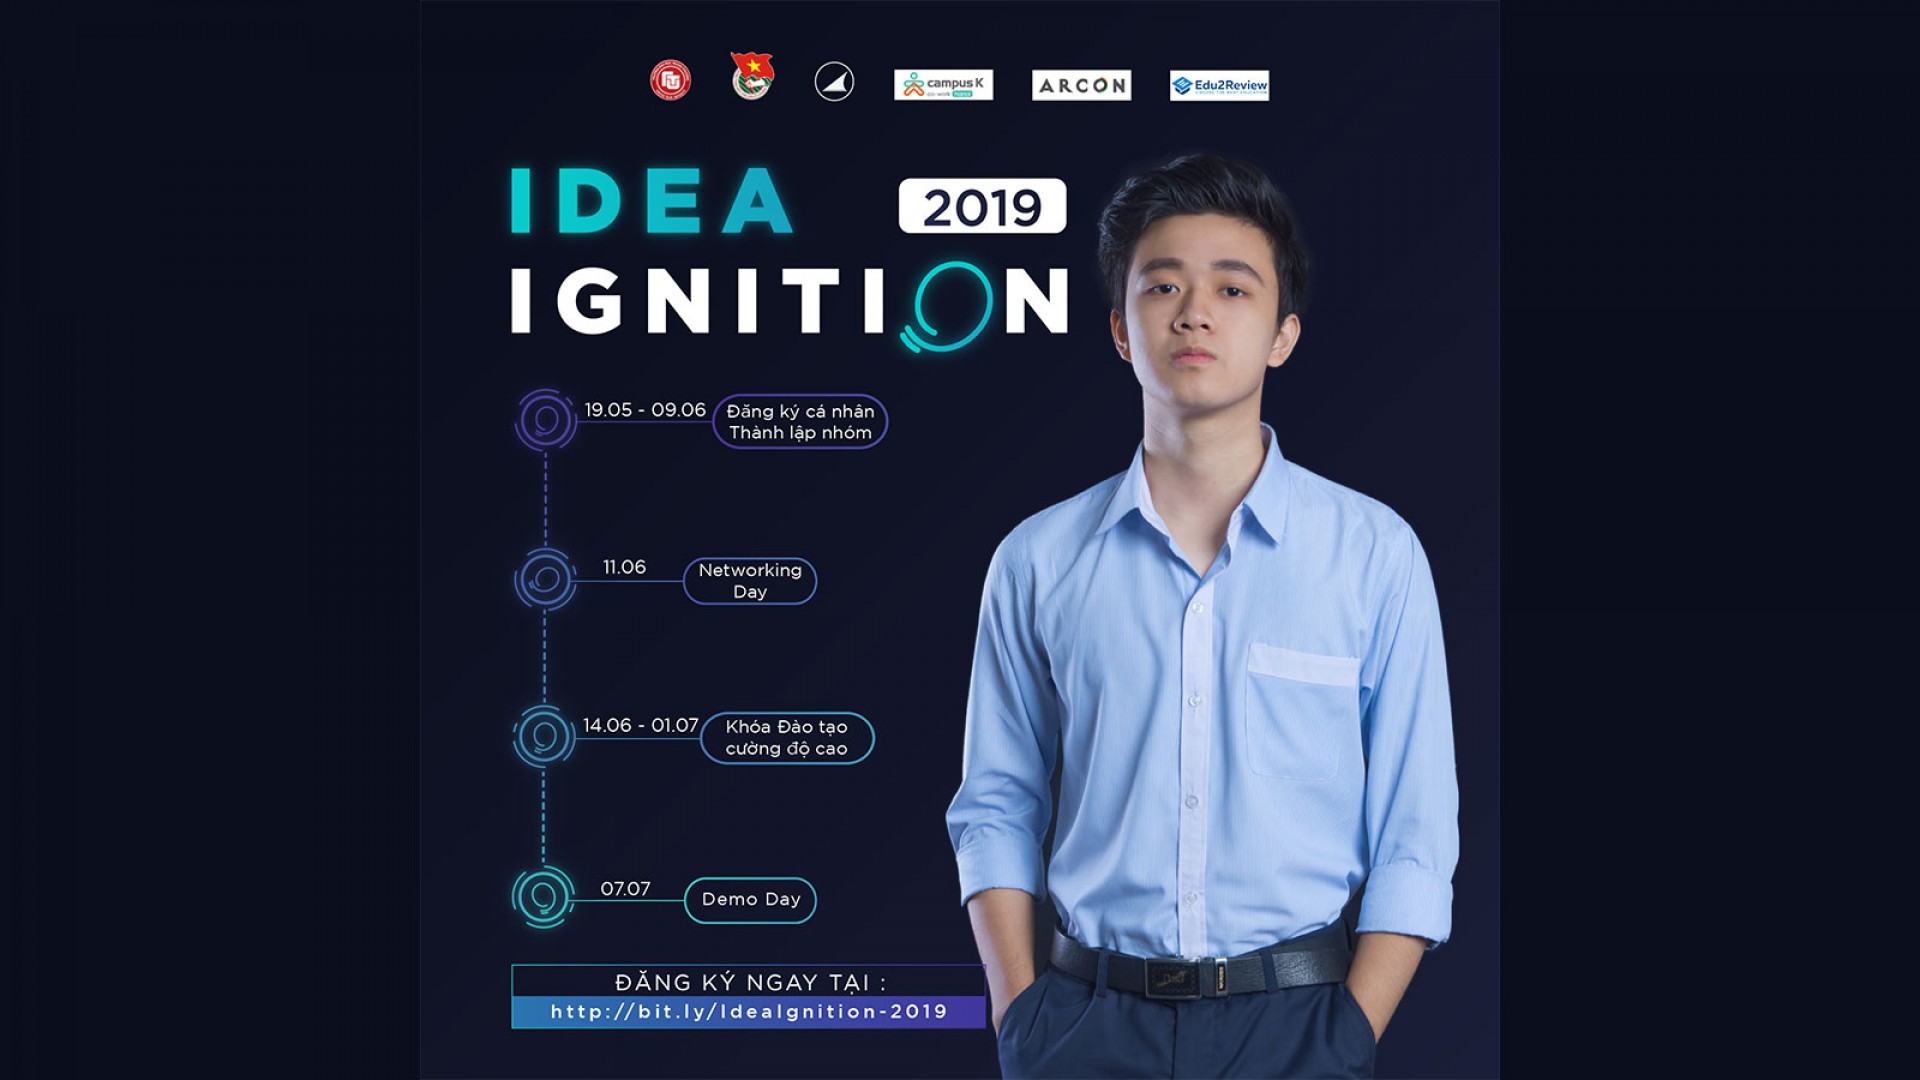 DÀNH RIÊNG CHO STARTUP PRE-IDEA: IDEA IGNITION 2019